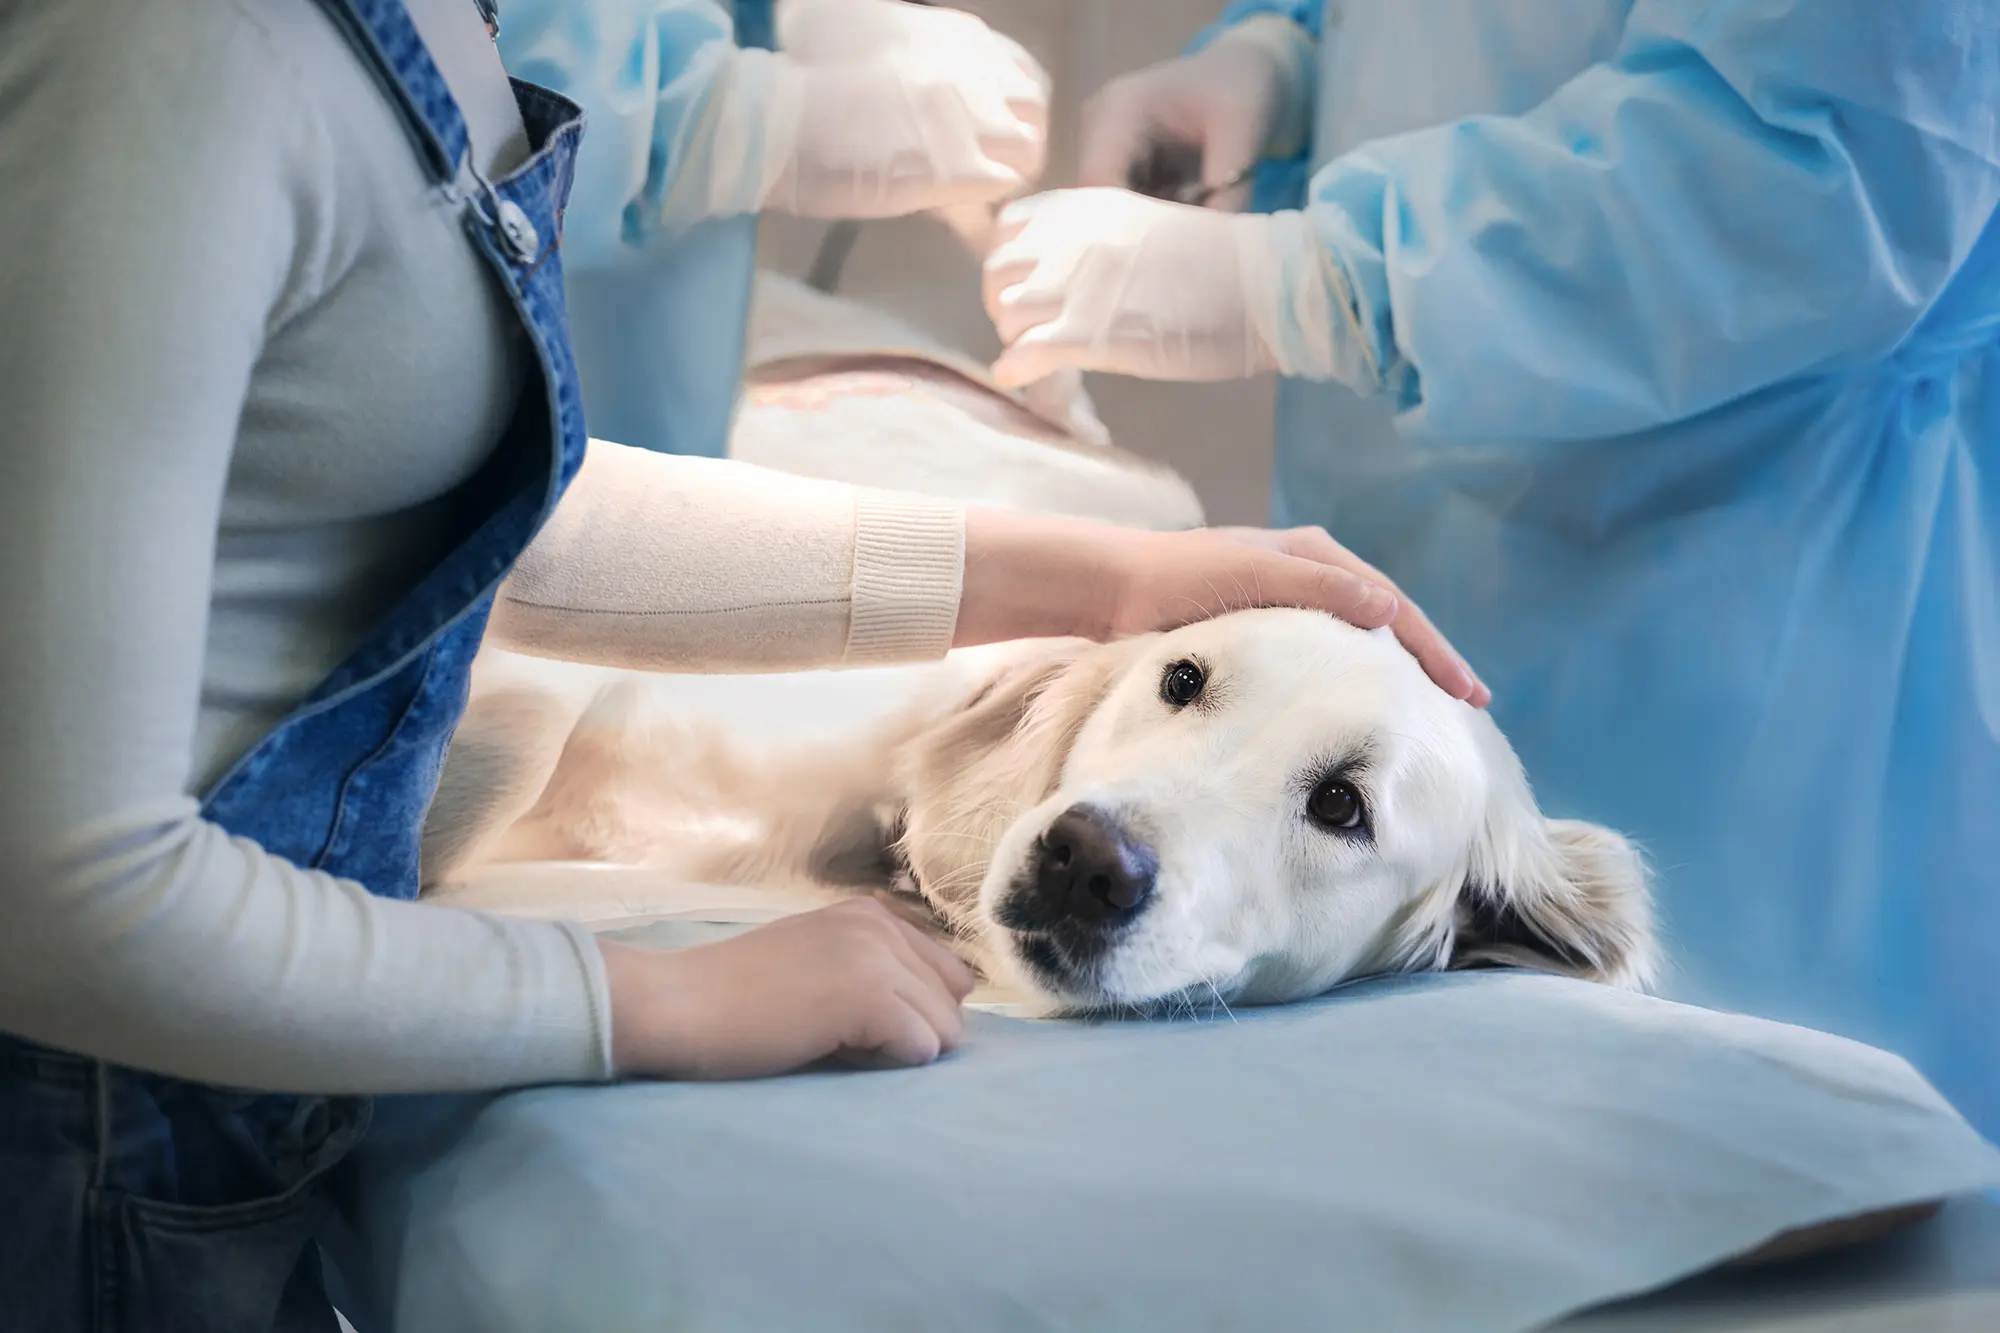 US Mysterious Michigan disease that killed dozens of dogs identified as parvovirus